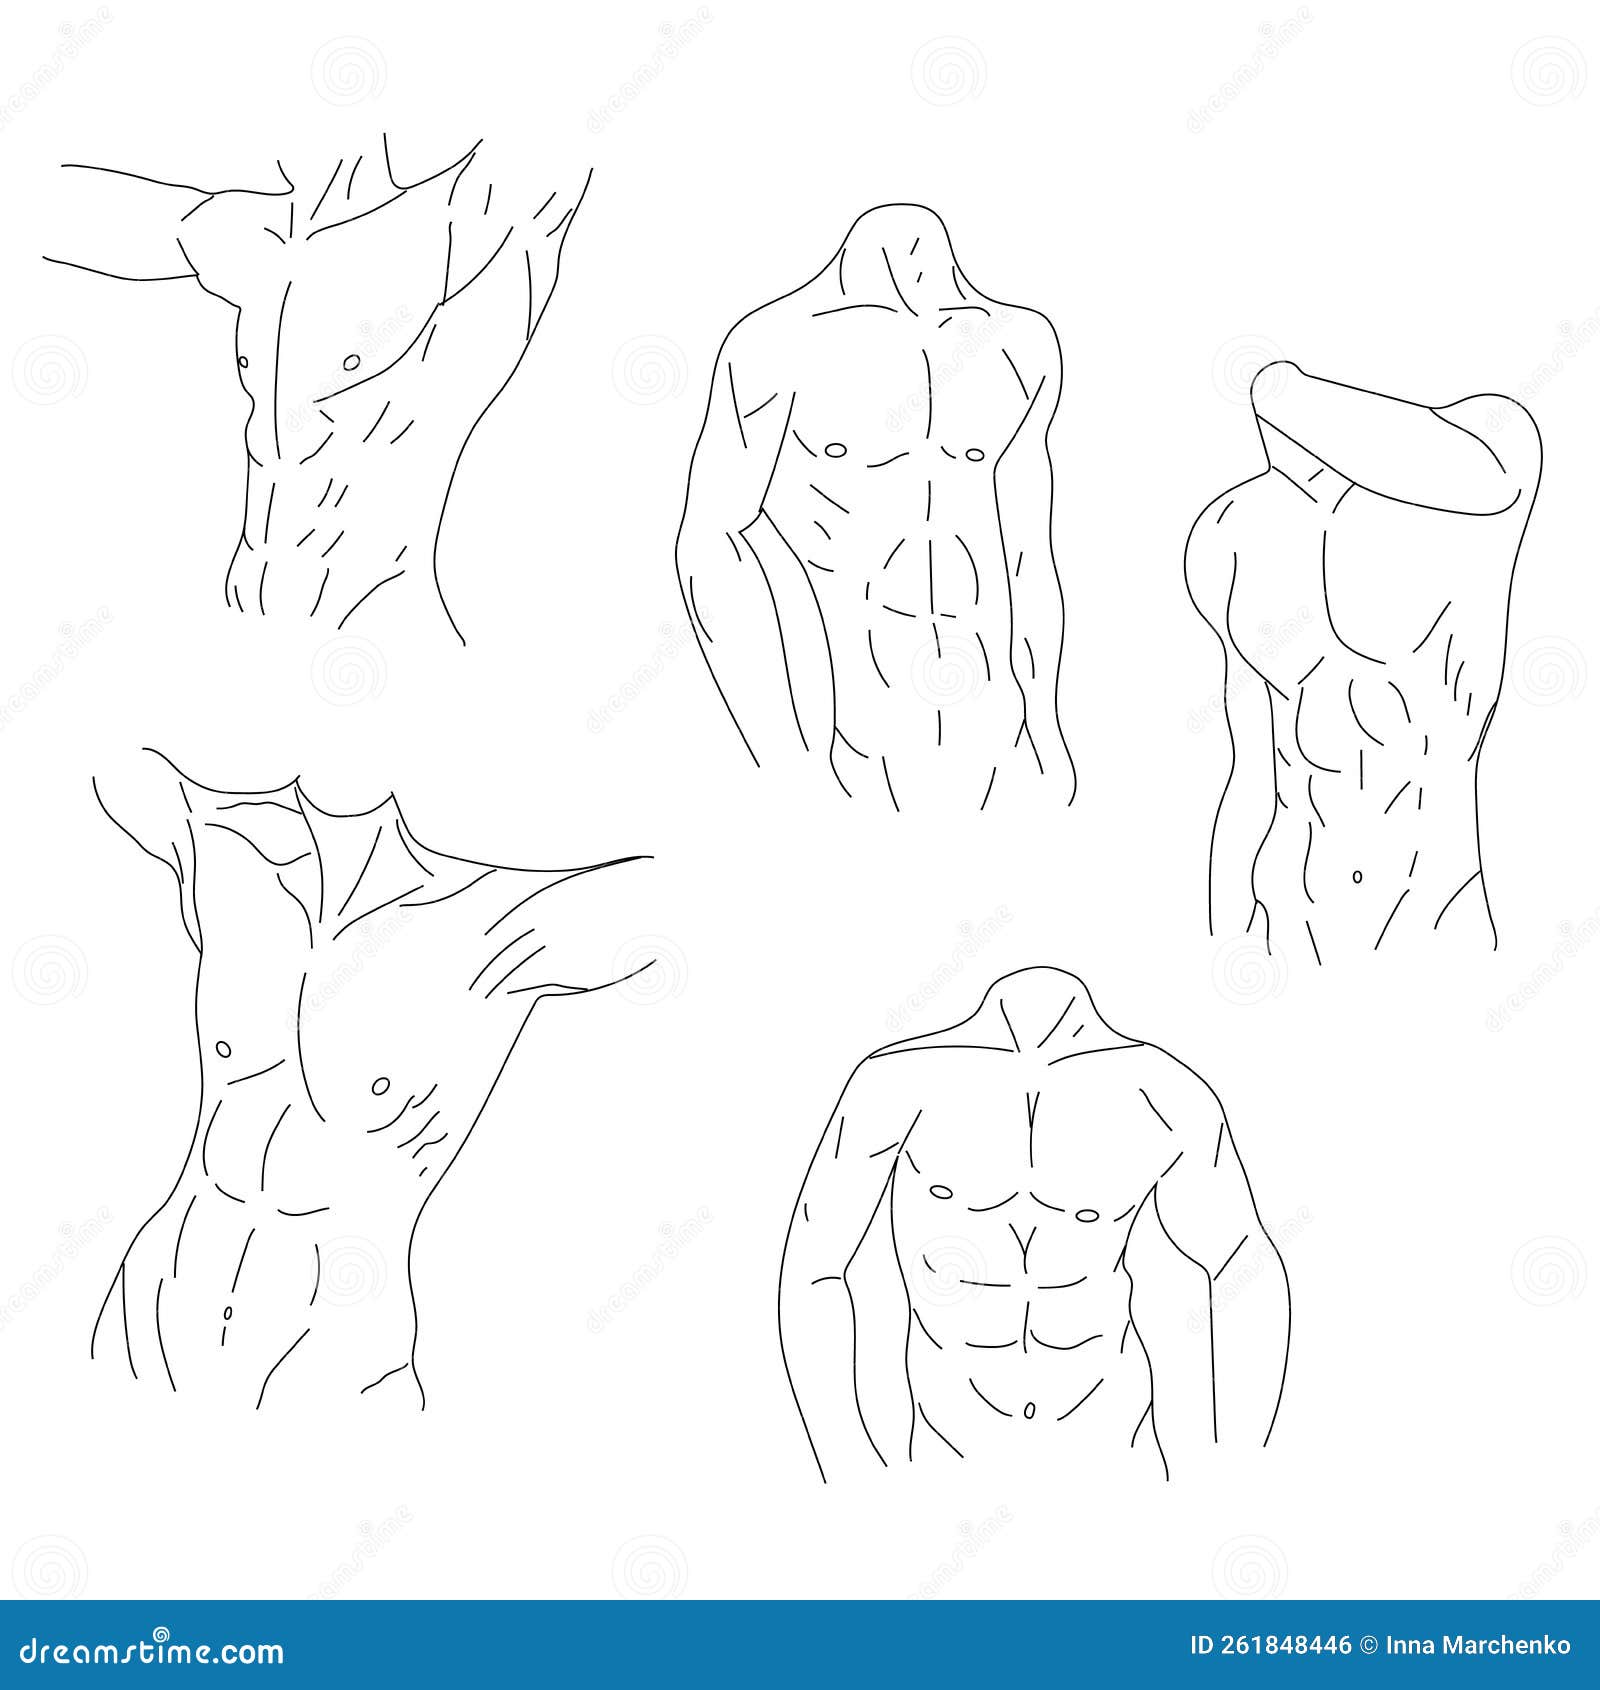 Muscular anime boy by draw2night on DeviantArt